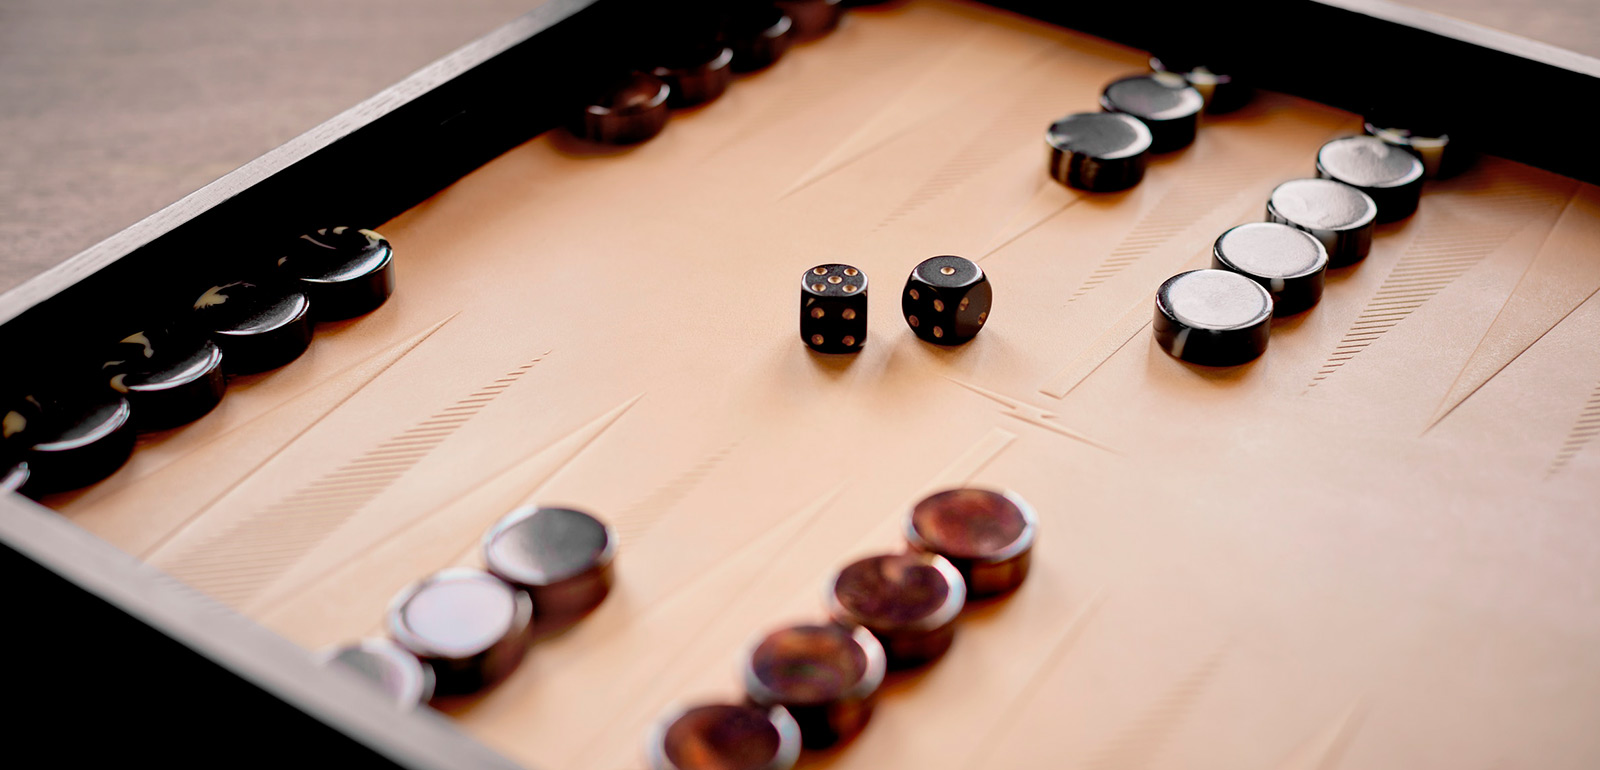 Backgammon - Board Games Ep. 1 